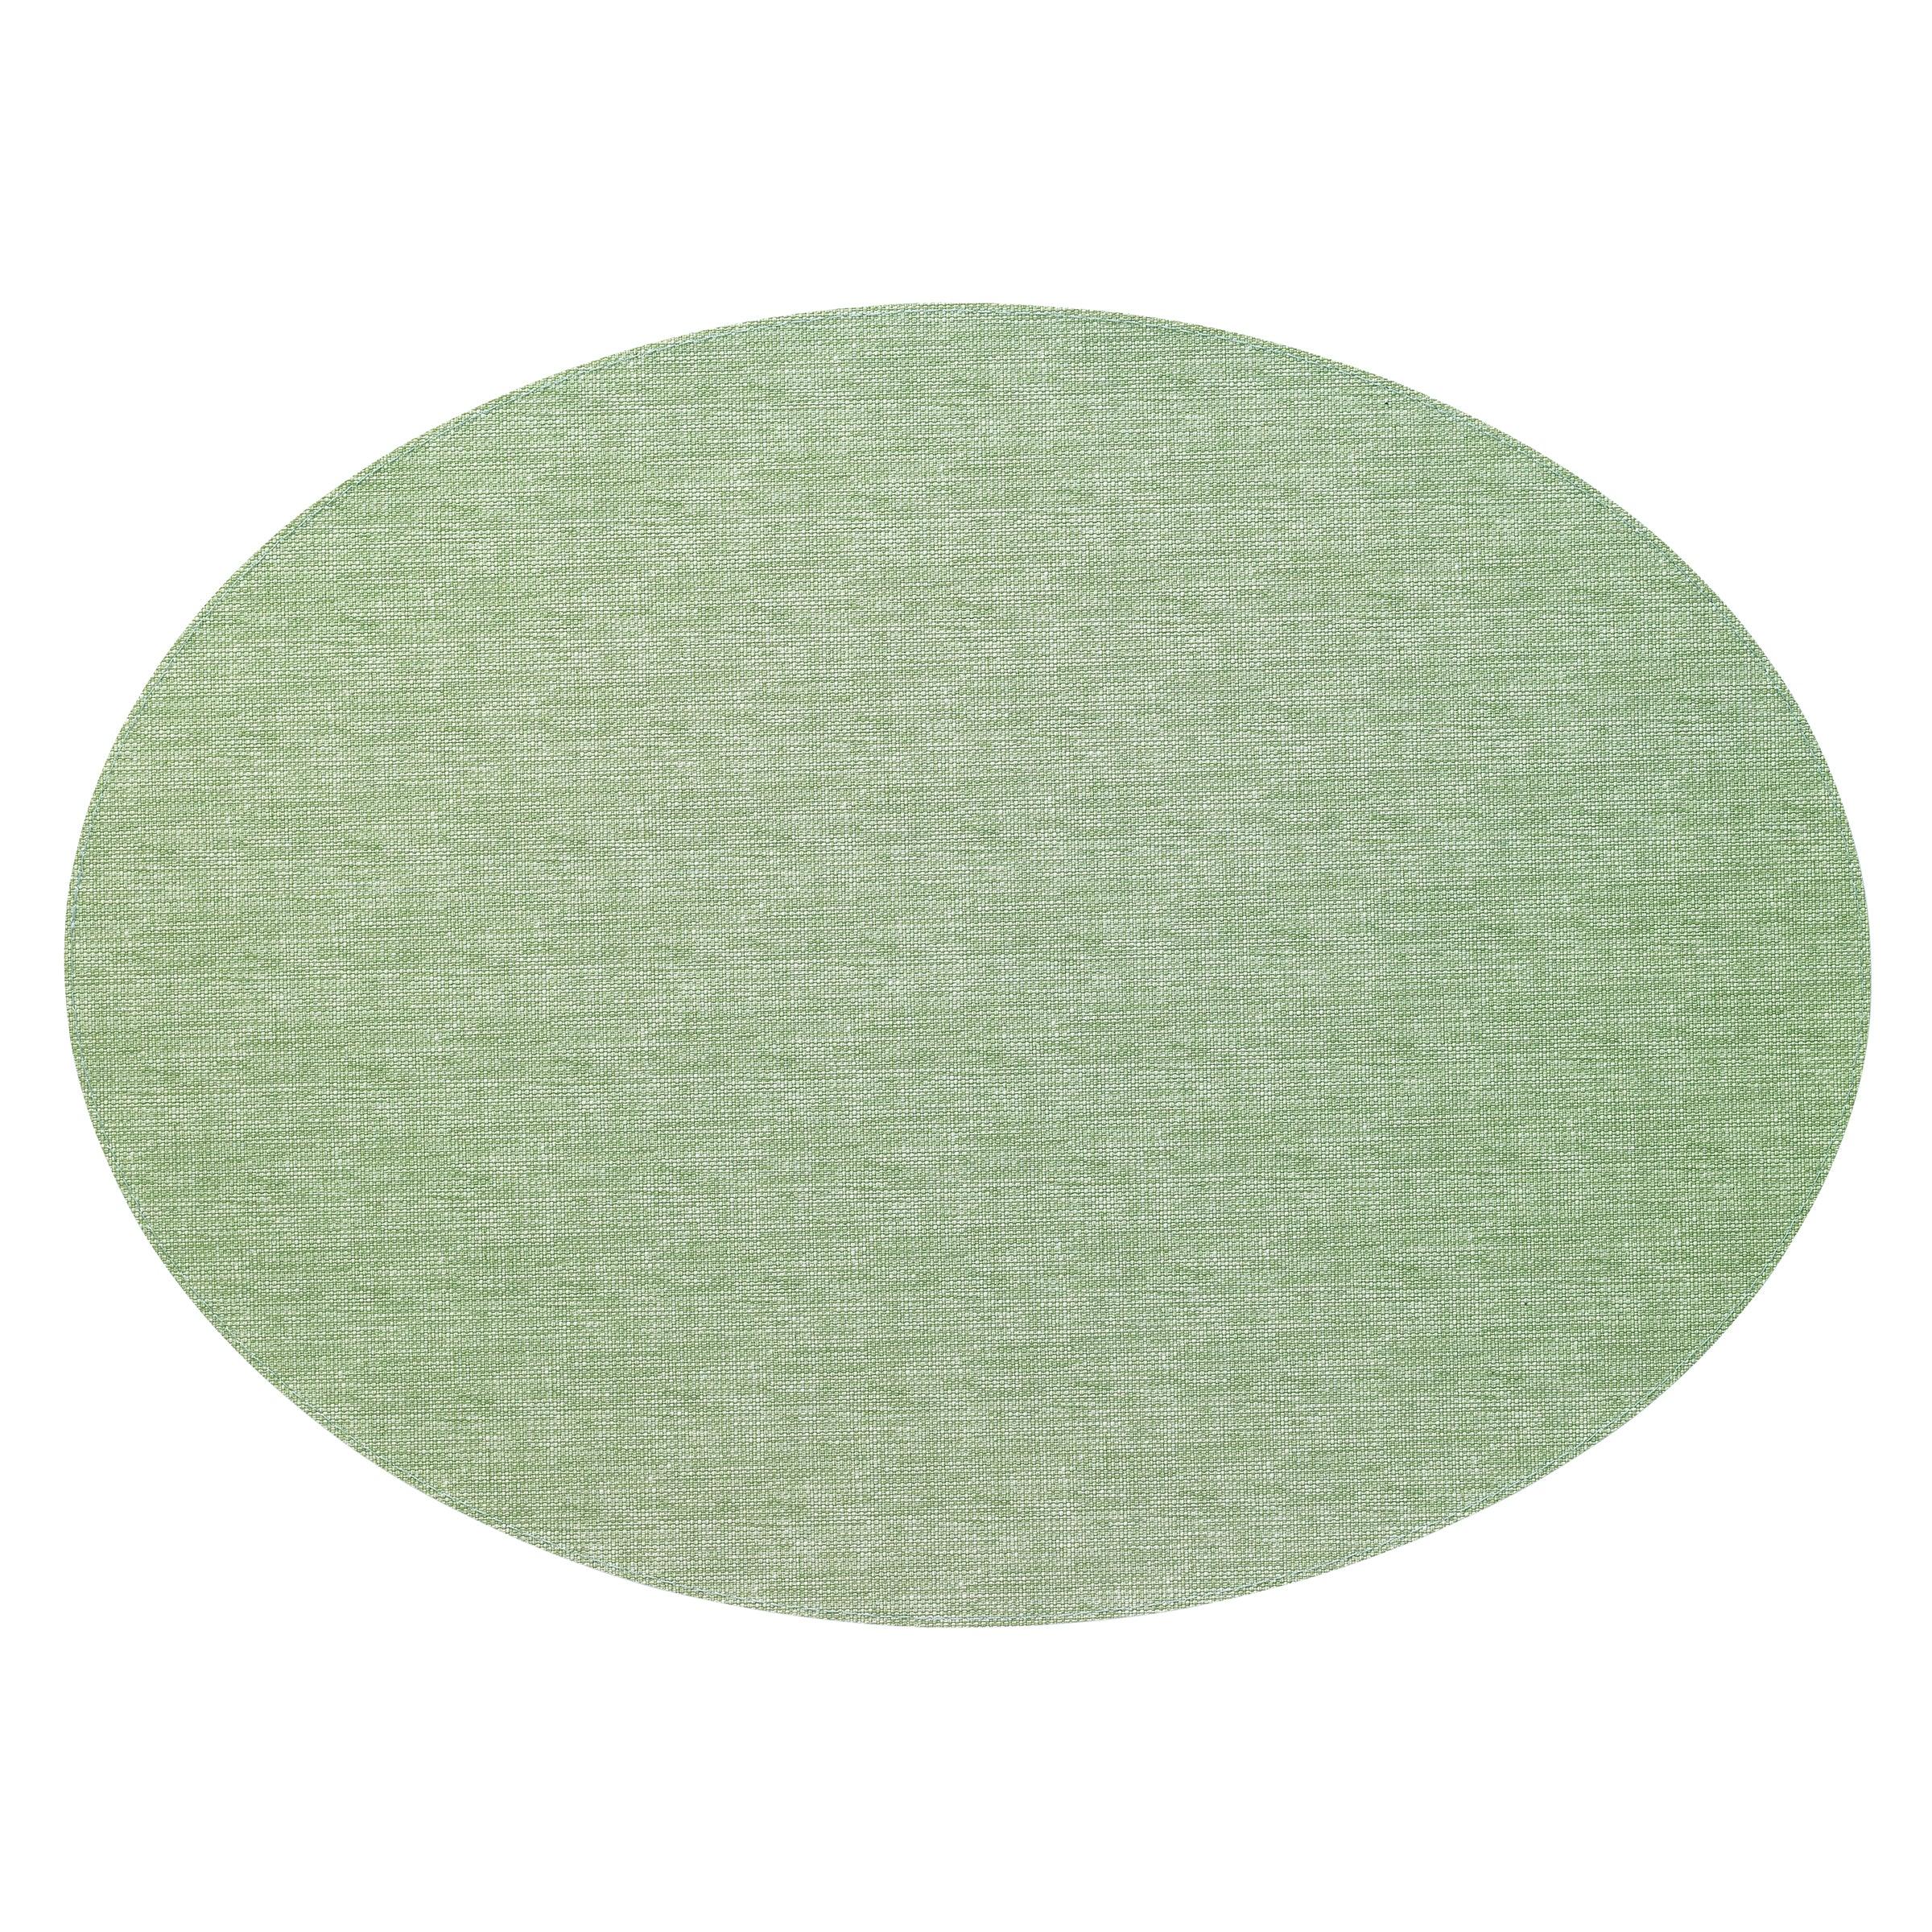 Botanica Oval Placemat - Elegant Linen